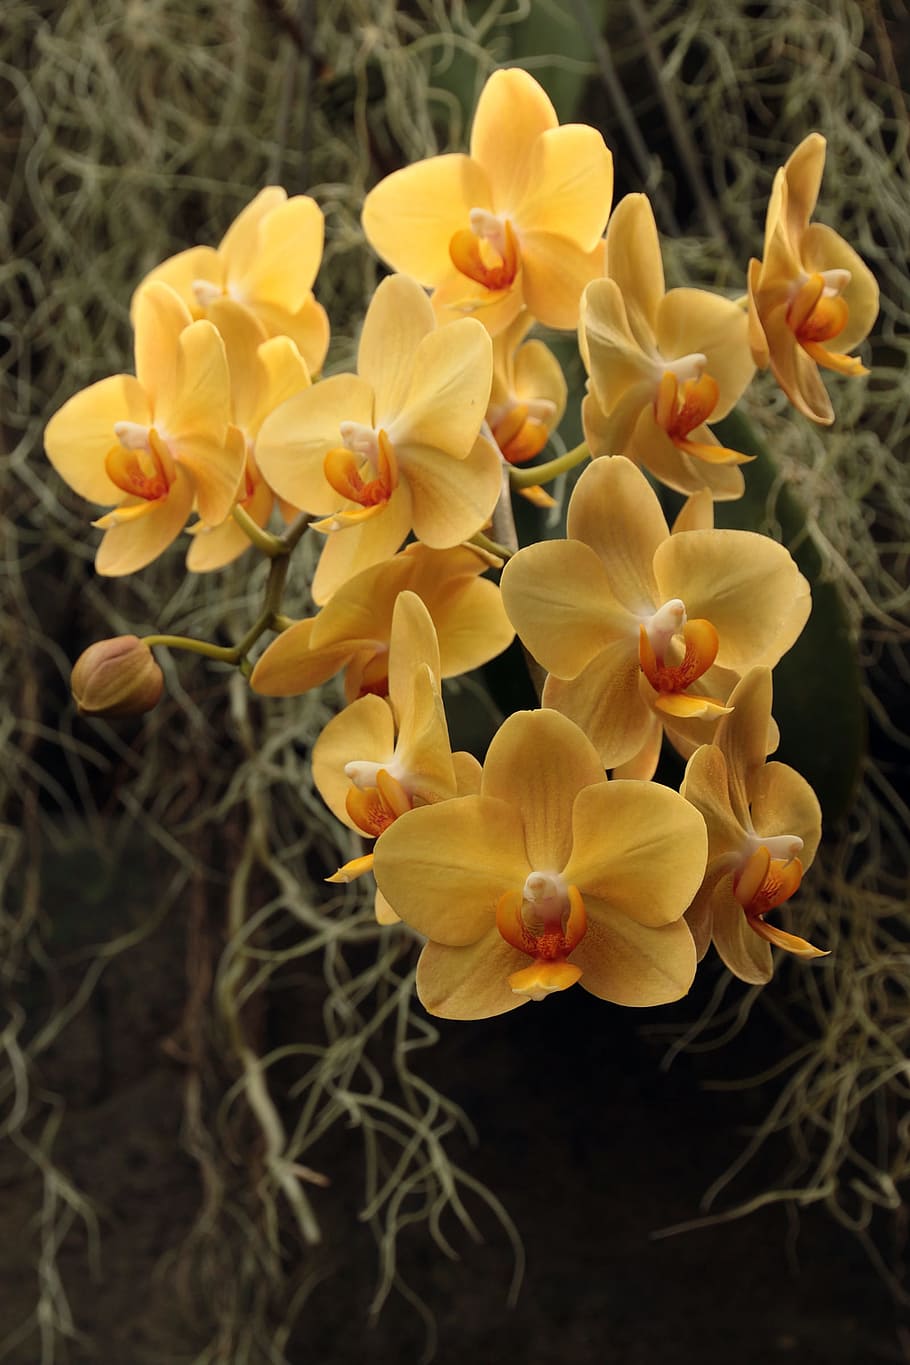 amarelo, flores da orquídea phalaenopsis, orquídeas traça, florescendo, estufa, inverno, cercado, musgos espanhóis, musgos., orquídea amarela phalaenopsis